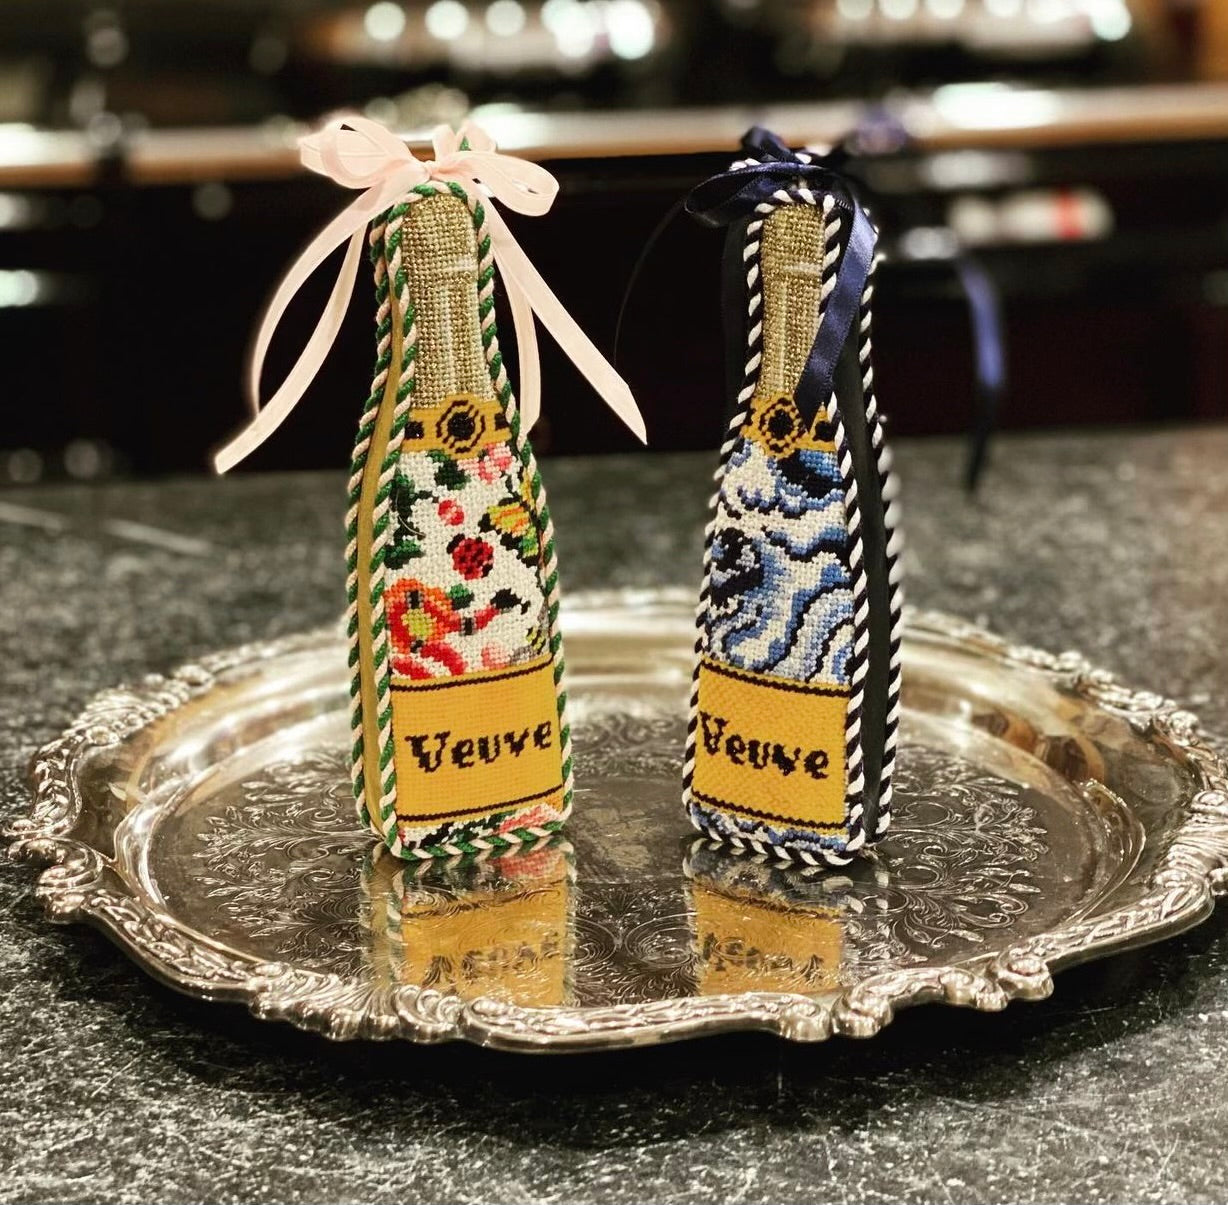 "Veuve" Champagne Bottle in Gucci Garden Floral Design handpainted Needlepoint Canvas by C'ate La Vie